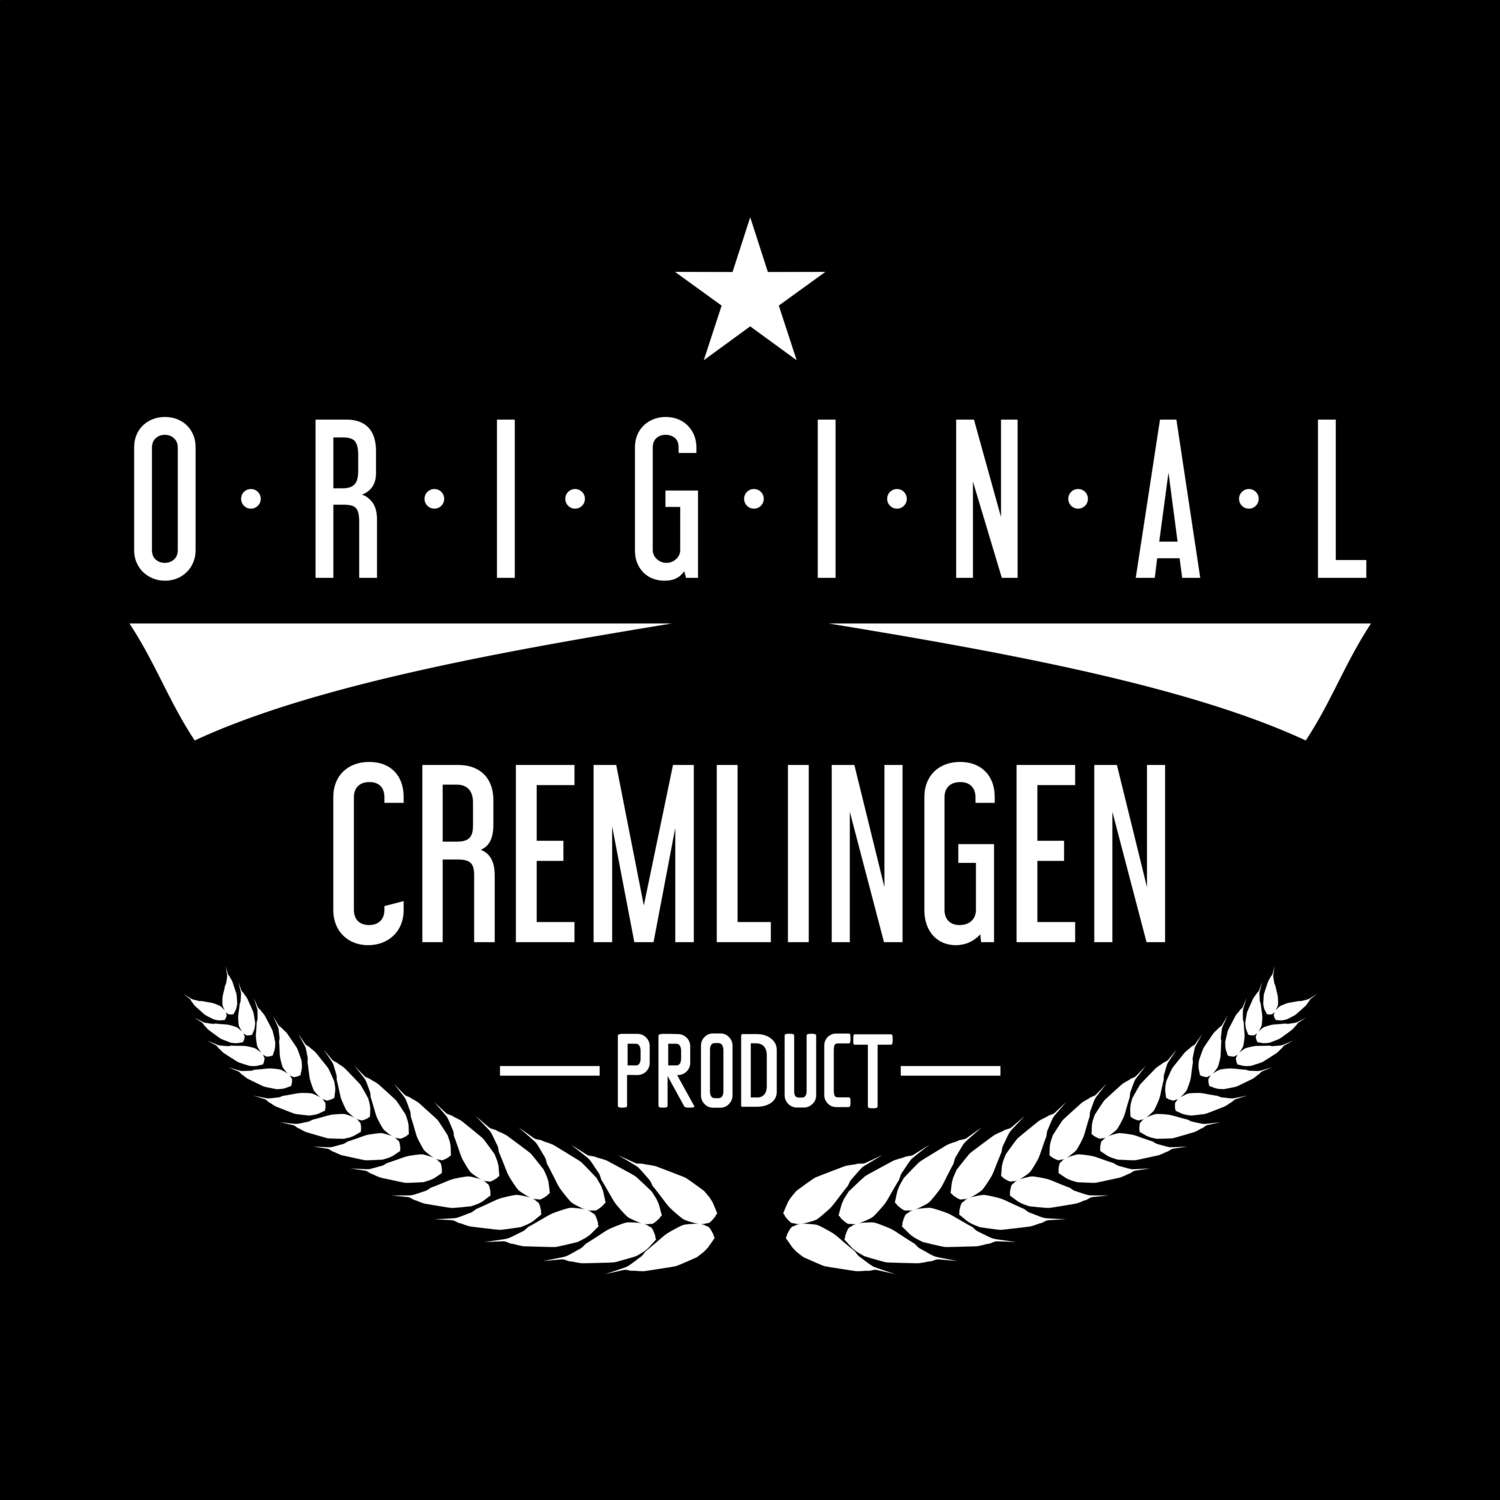 Cremlingen T-Shirt »Original Product«